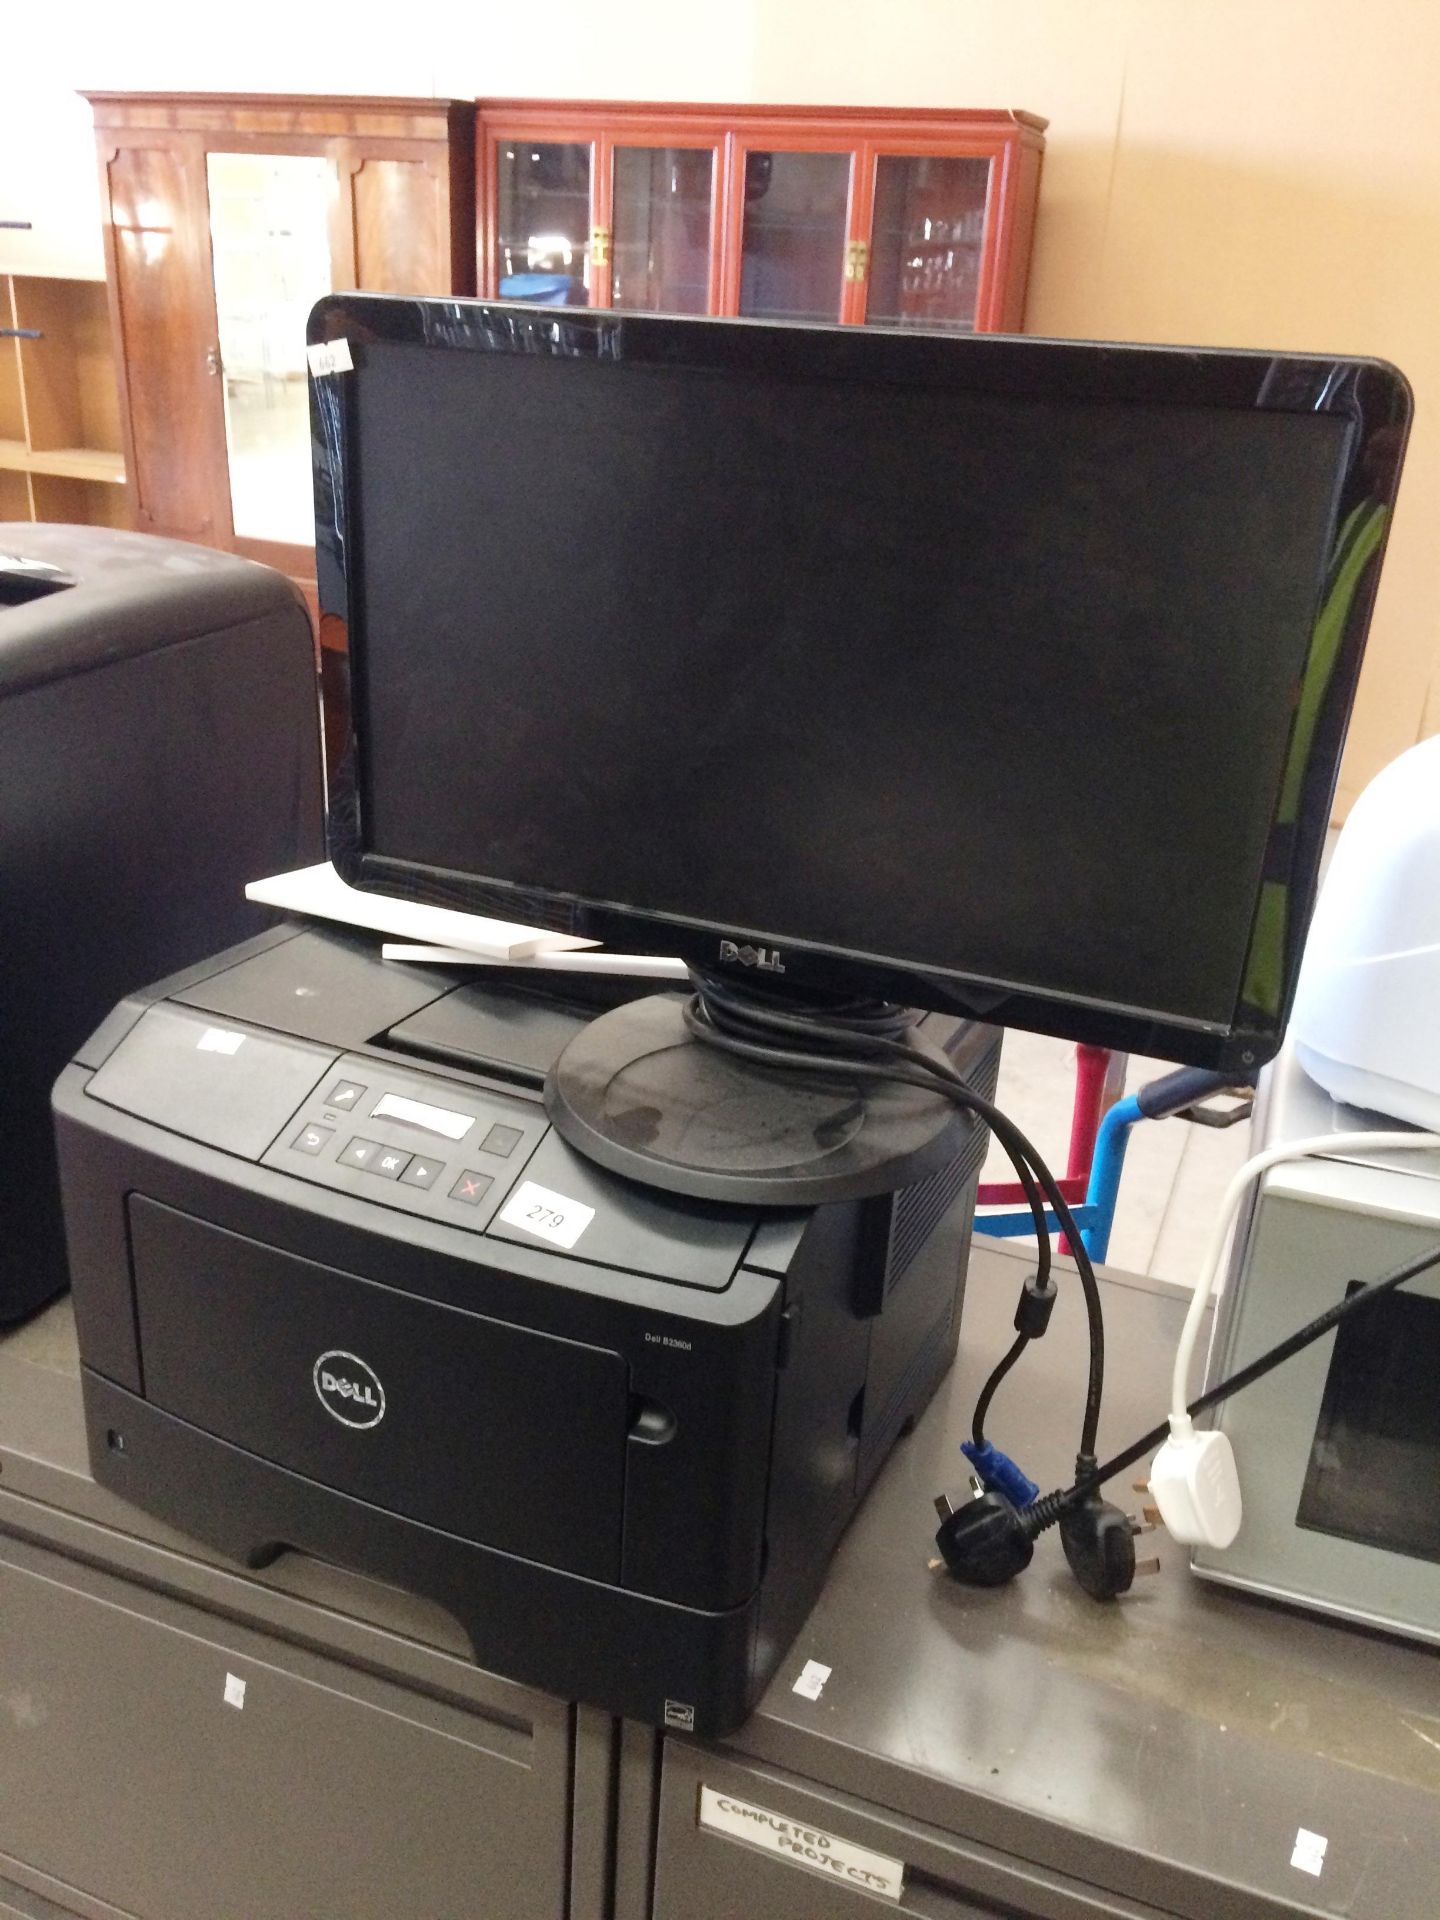 2 x items - Dell 19" LCD monitor (no lead) and a Dell B2360d printer